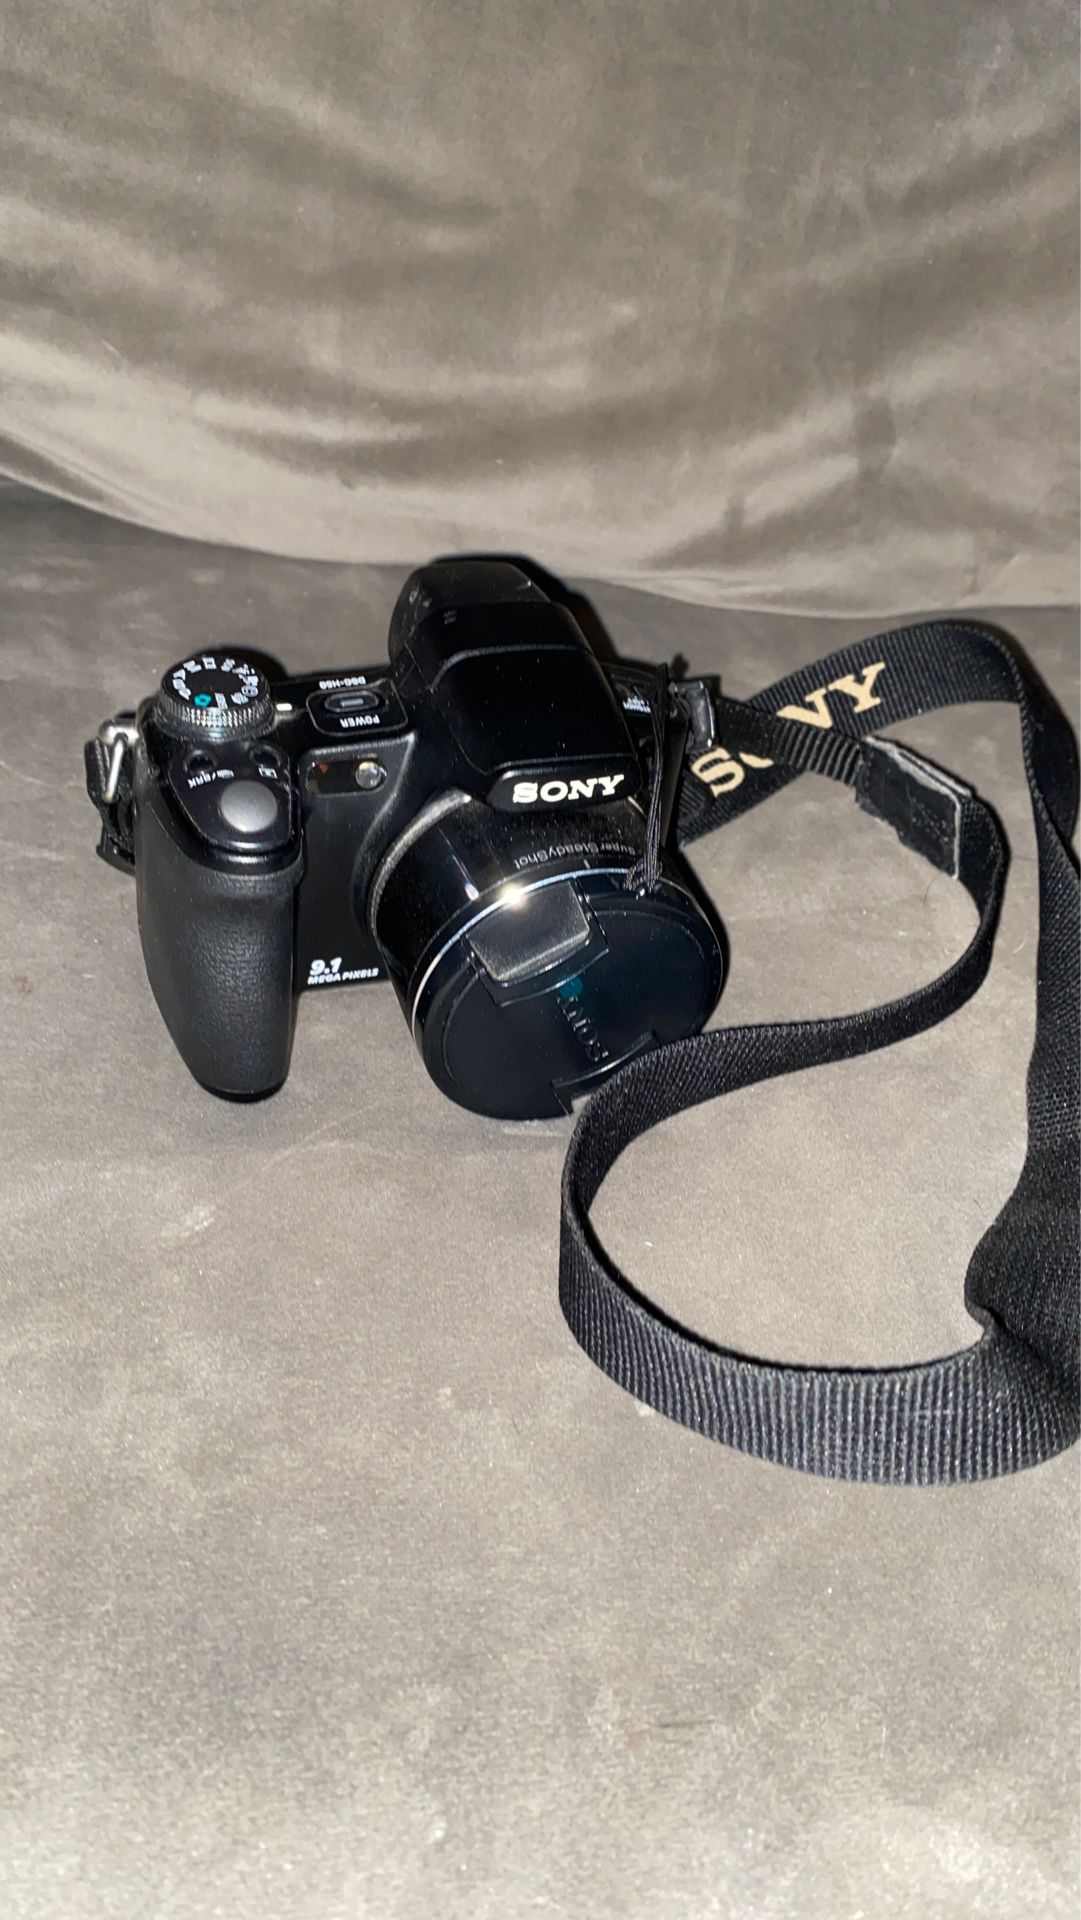 Sony 9.1 megapixel digital camera